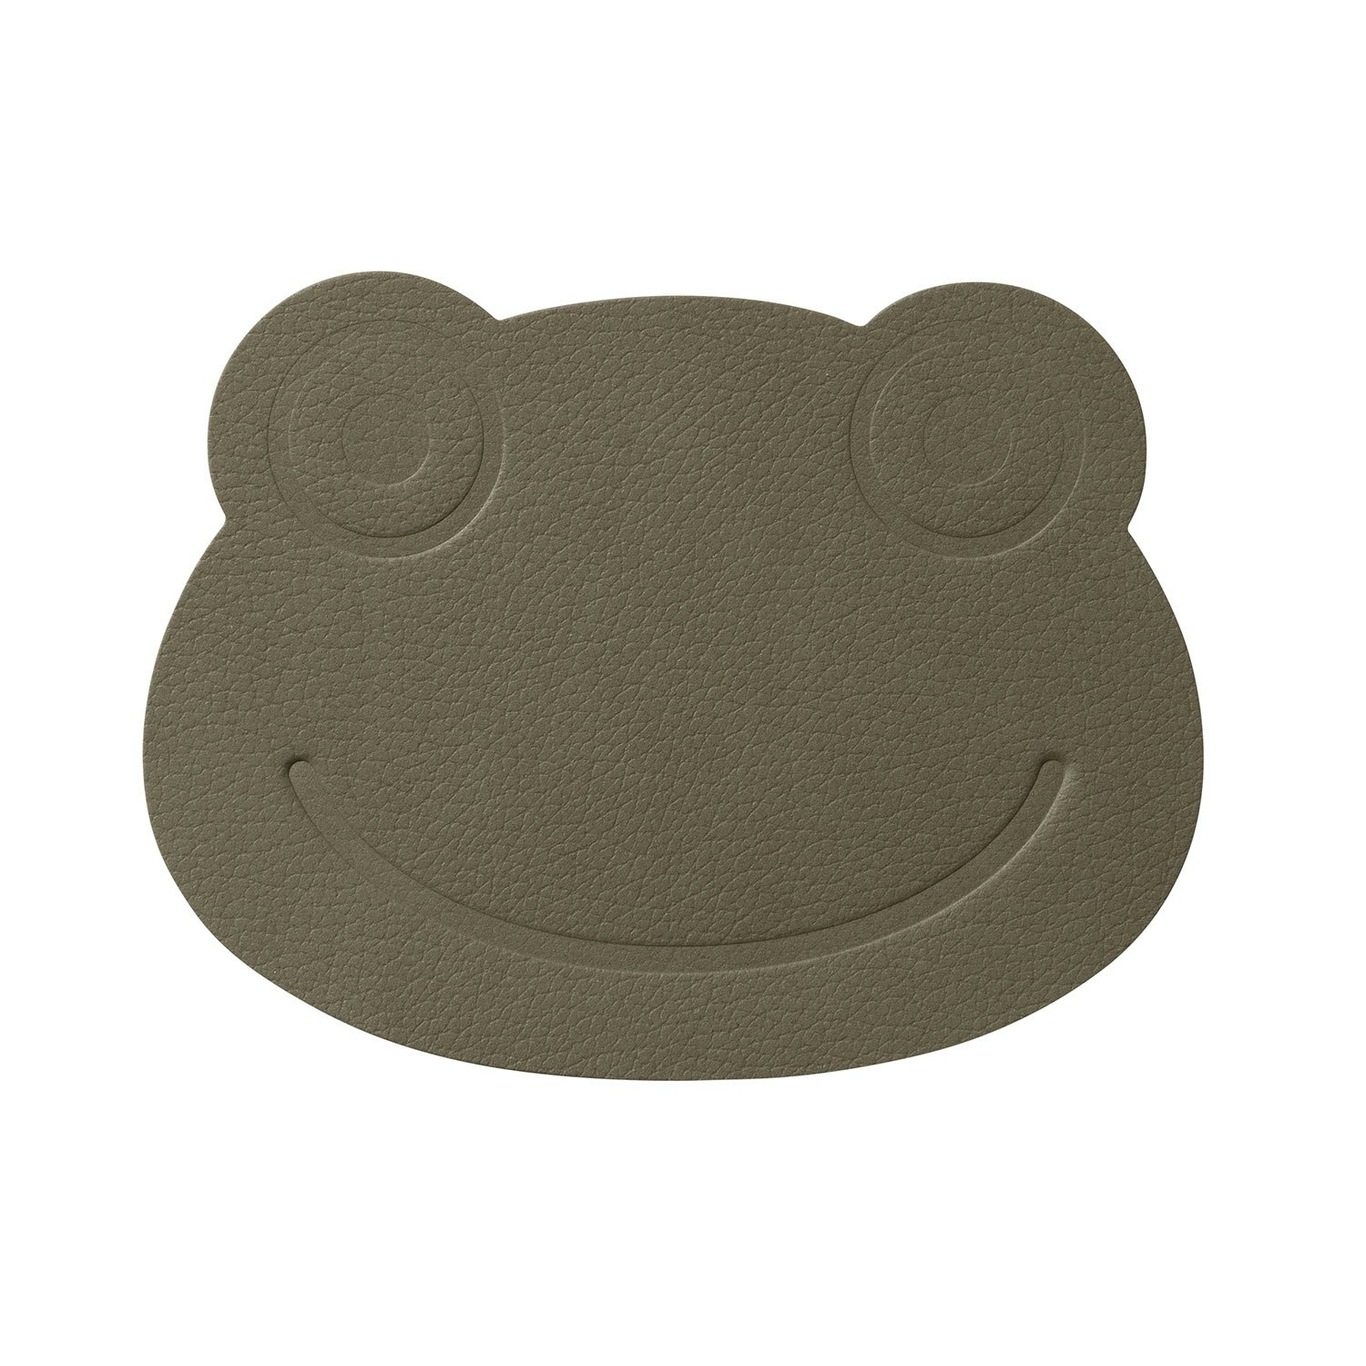 Frog Coaster, Nupo Army Green